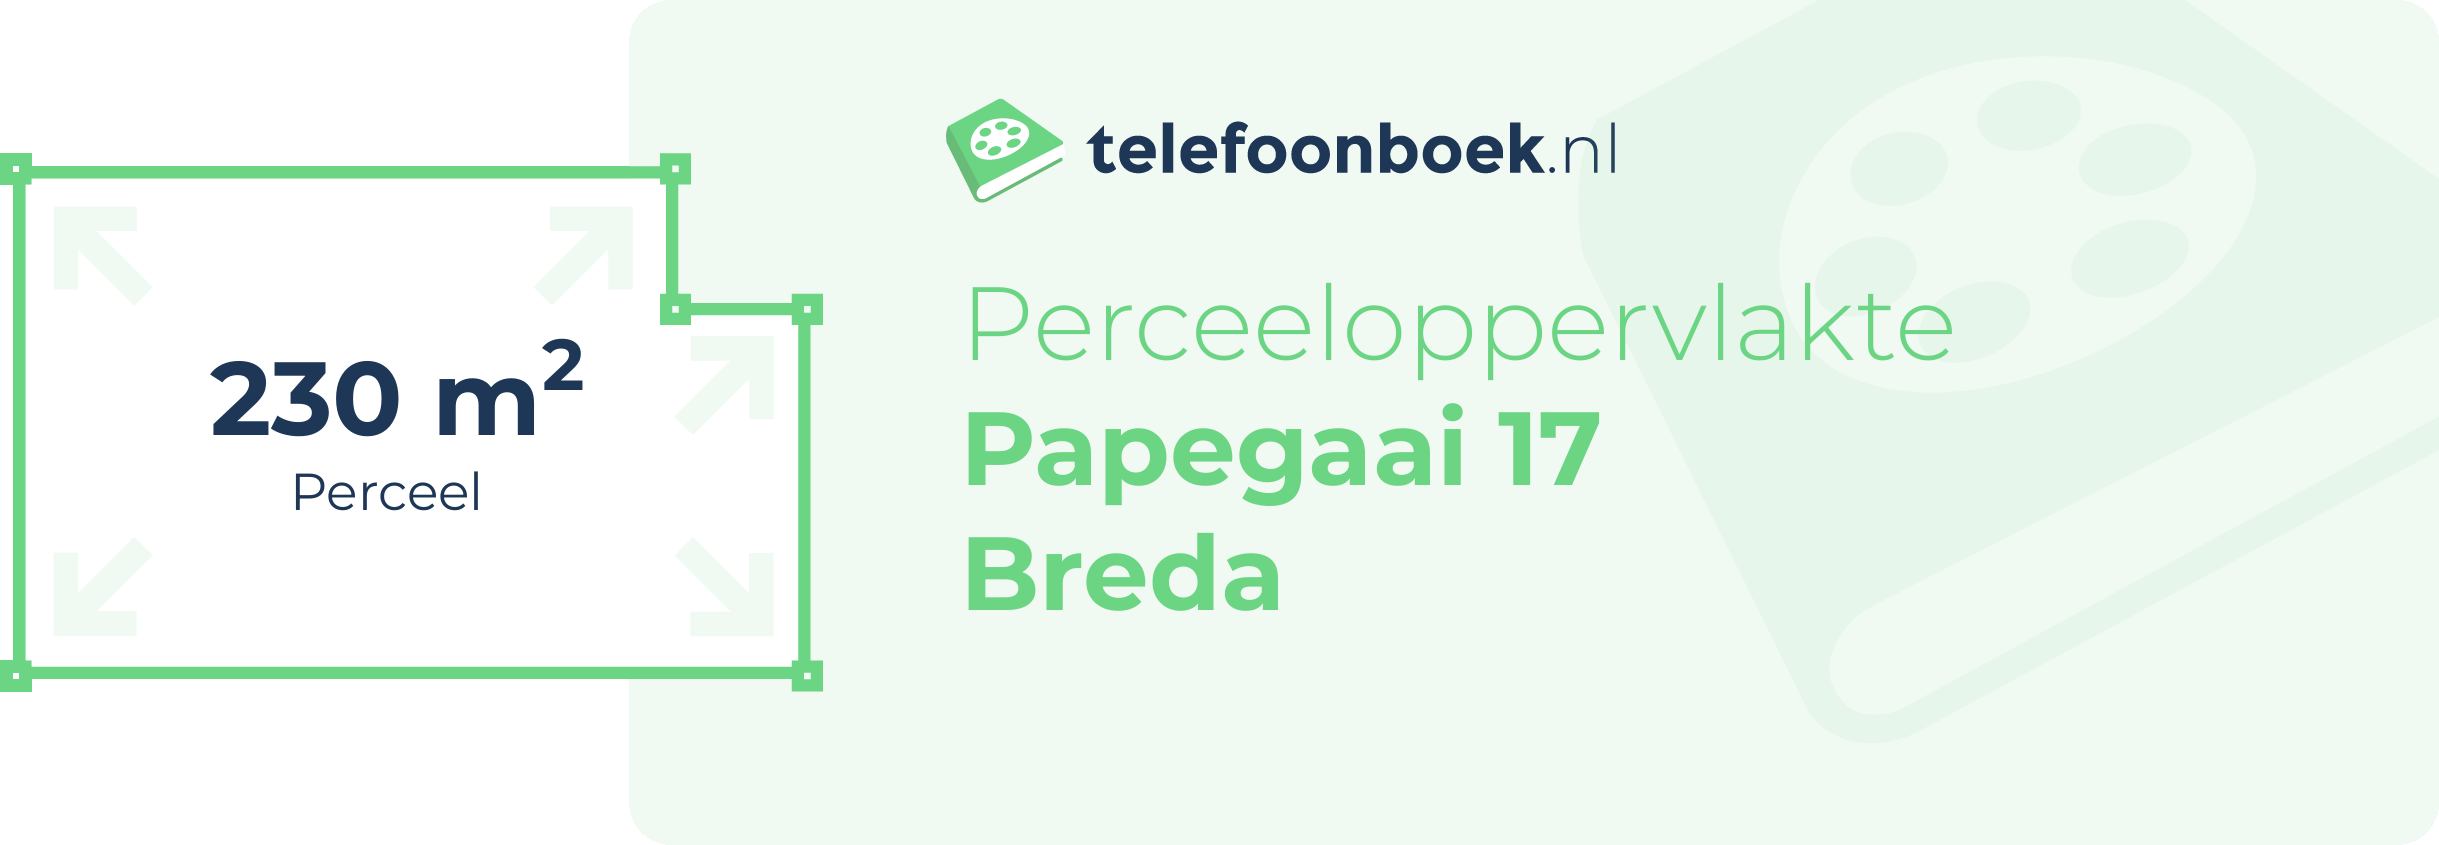 Perceeloppervlakte Papegaai 17 Breda